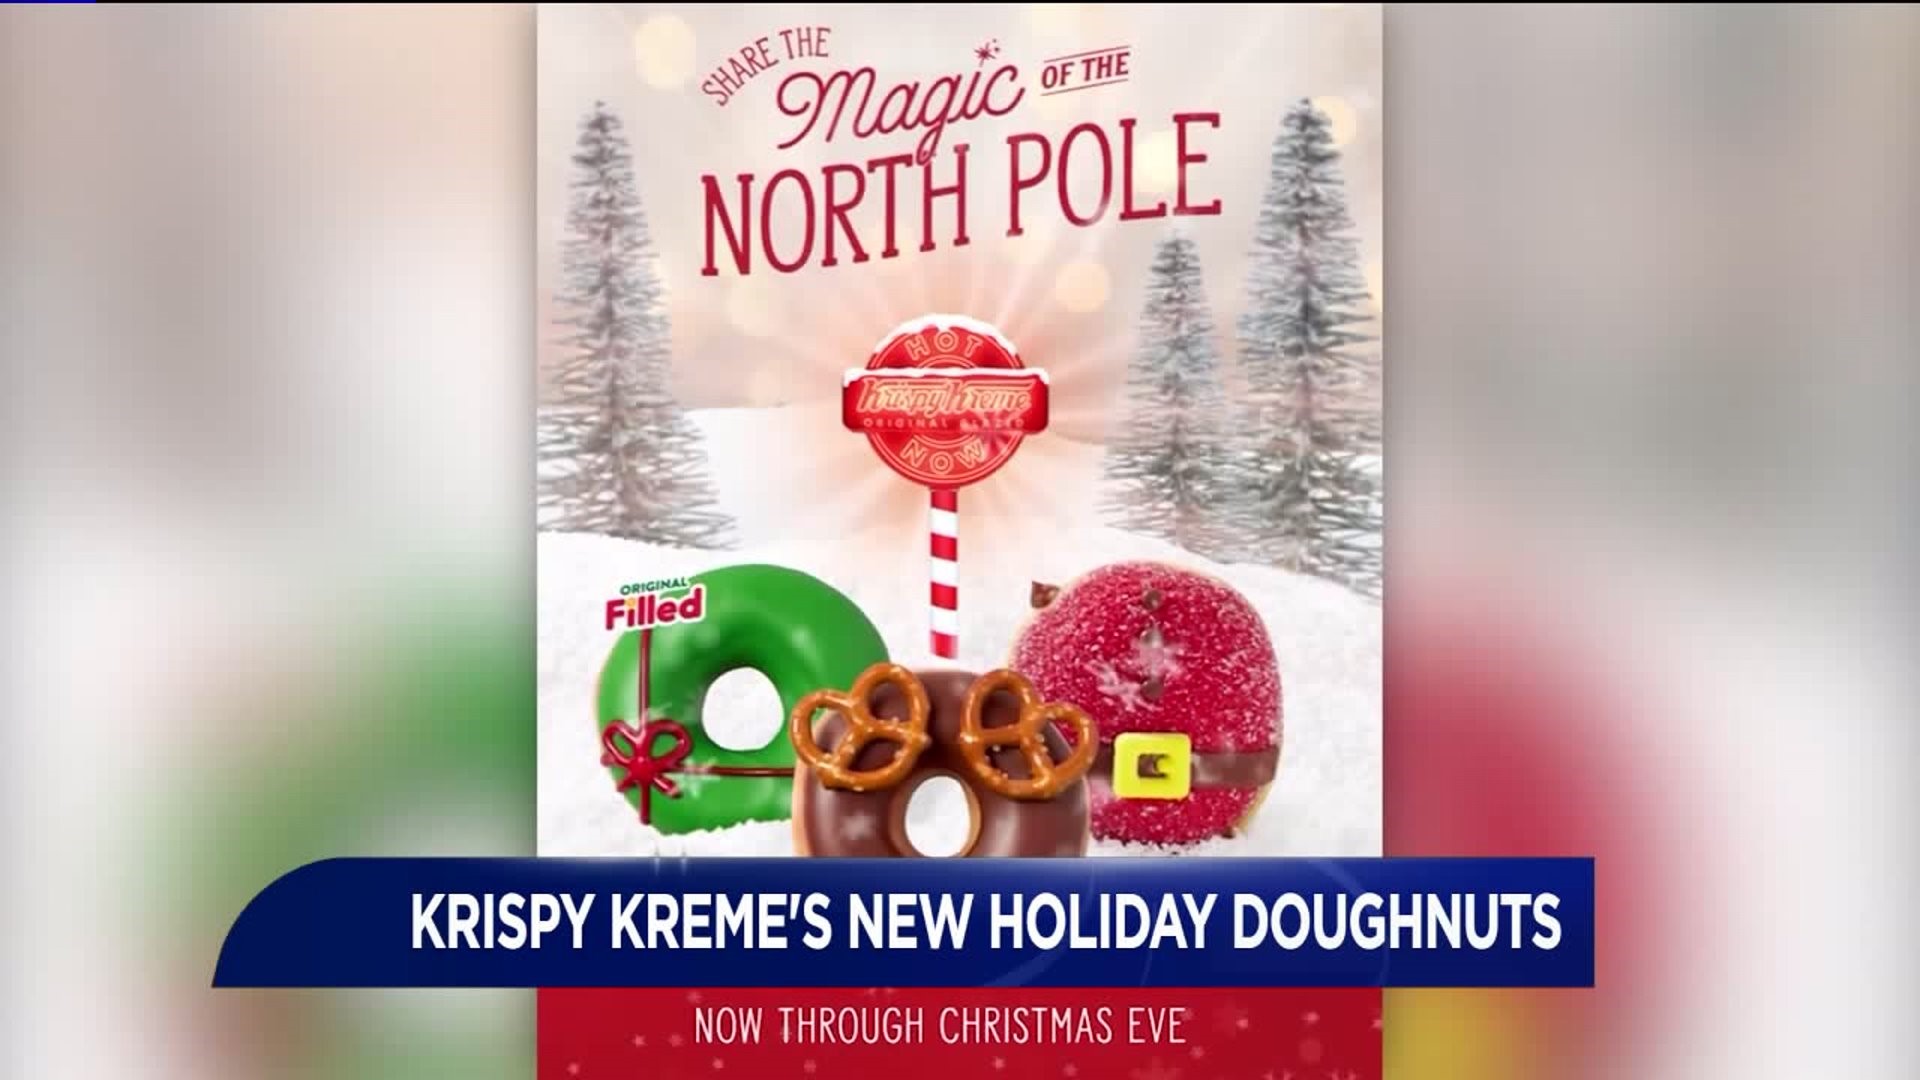 Three New Holiday-Inspired Doughnuts Available at Krispy Kreme